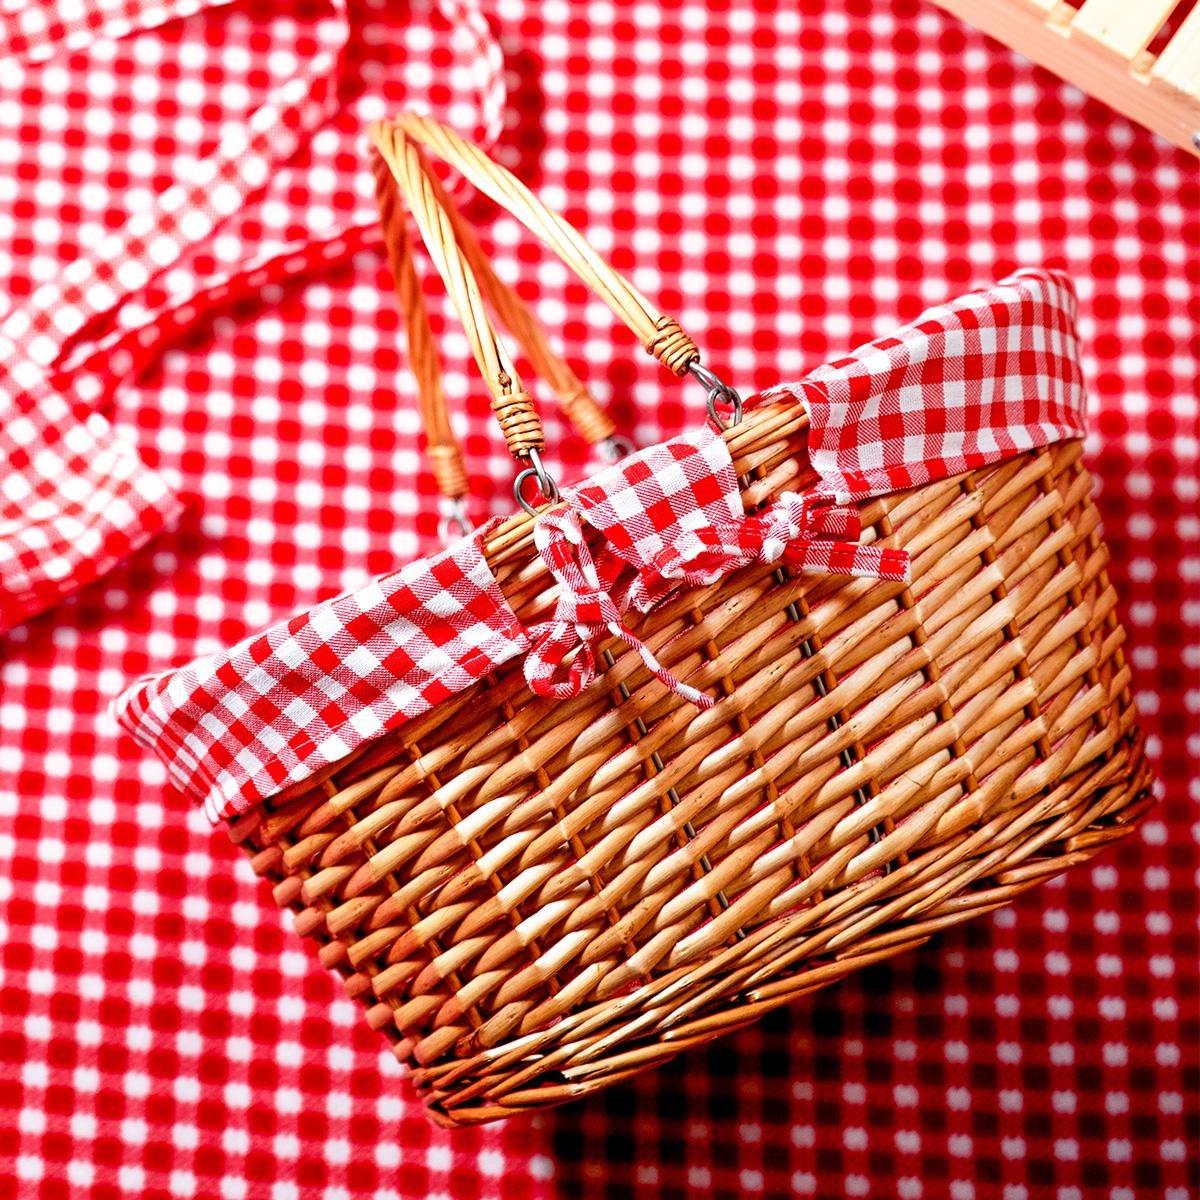 Multicolour red picnic basket